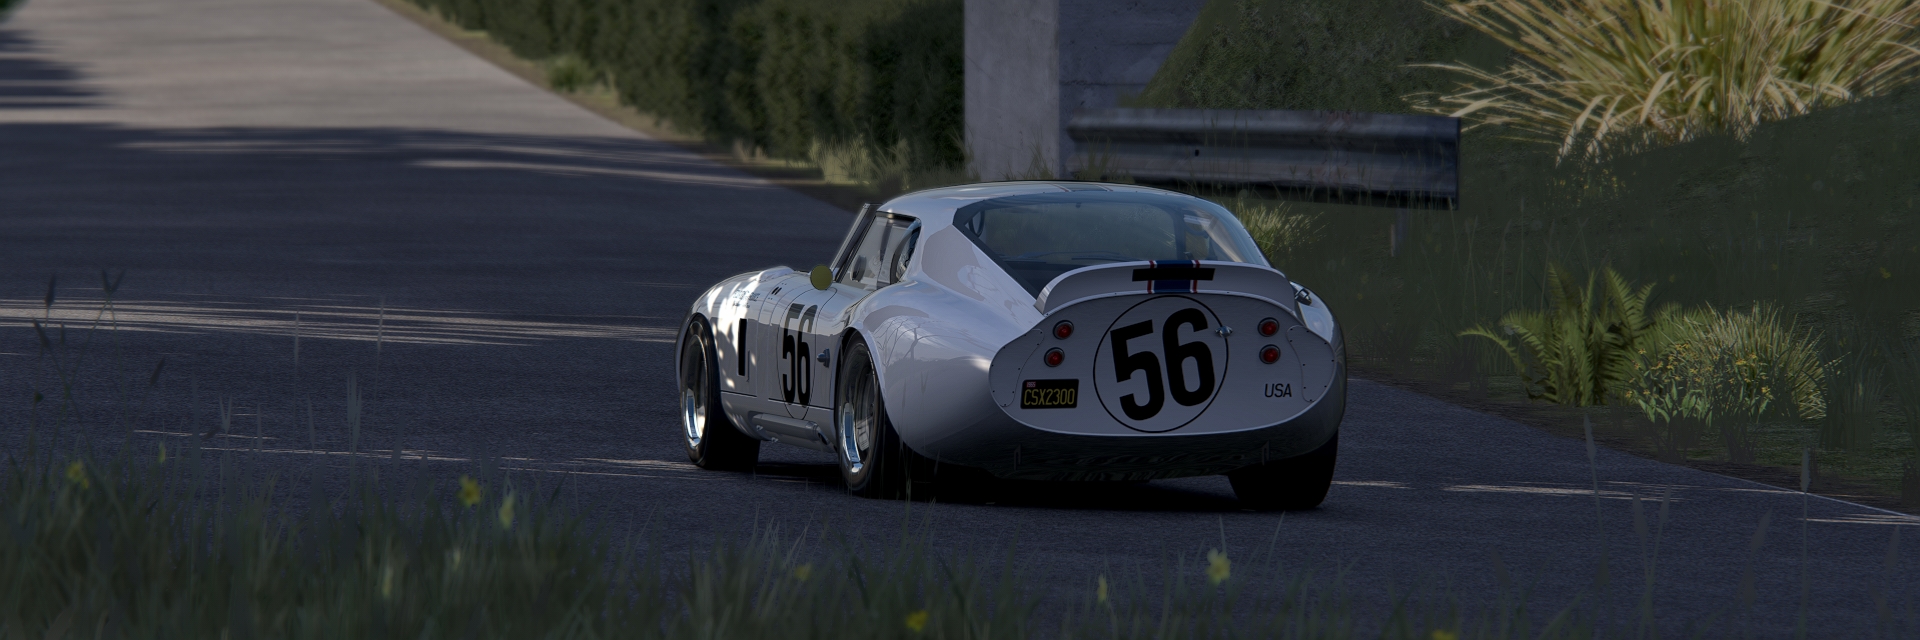 Screenshot_ac_legends_gt_shelby_daytona_nurburgring1967_18-11-122-15-15-43.jpg